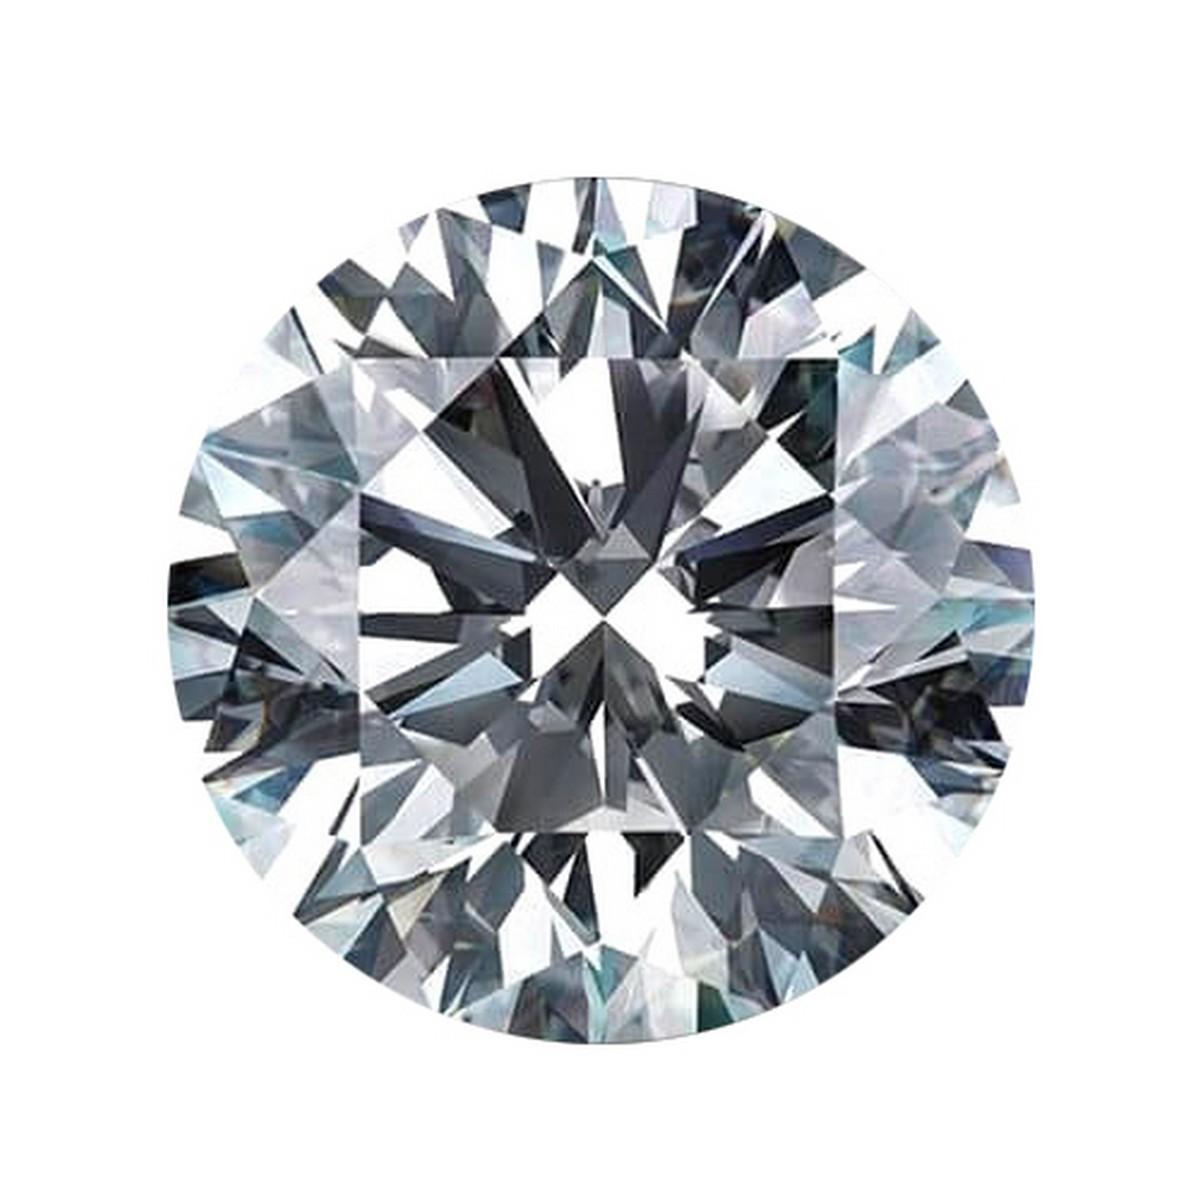 10.06 ctw. VVS2 IGI Certified Round Cut Loose Diamond (LAB GROWN)